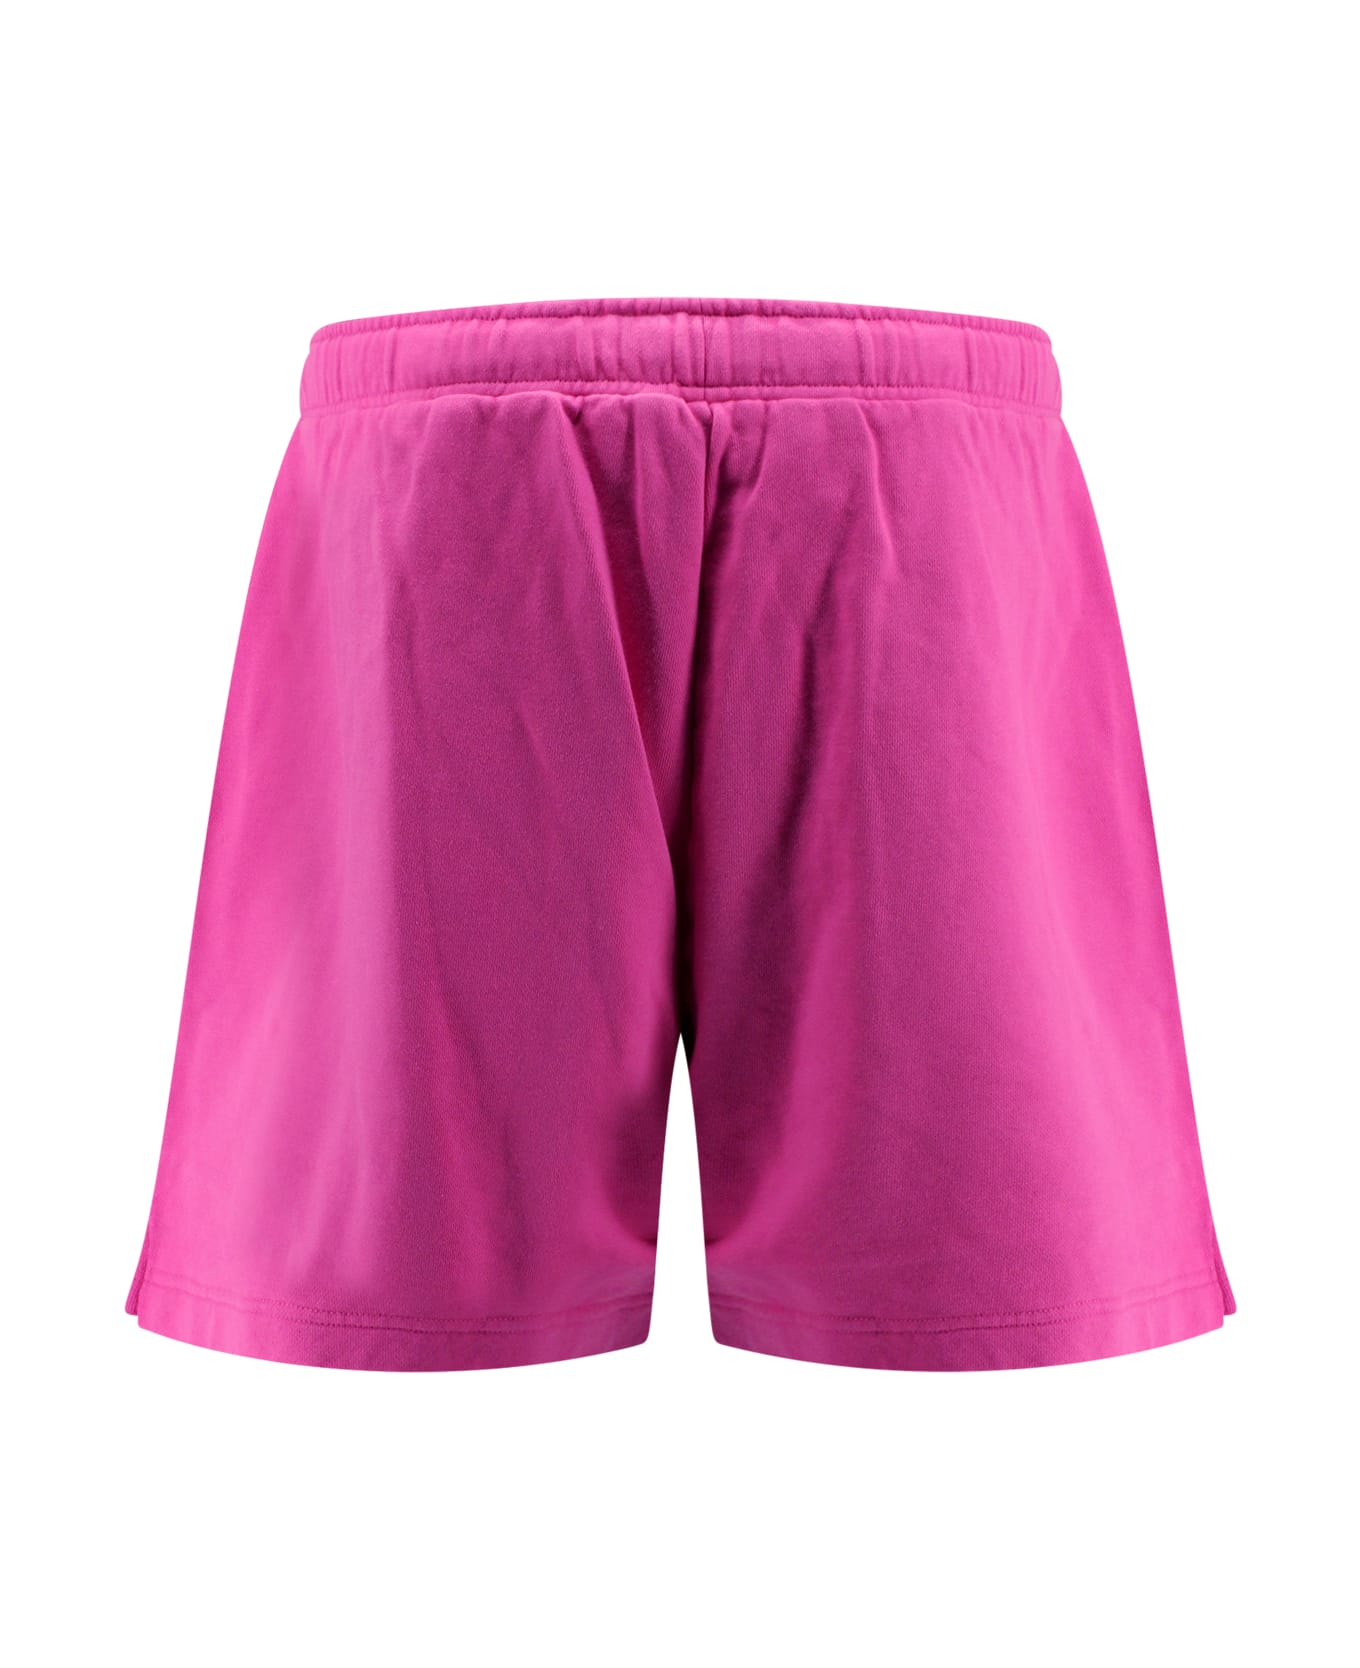 Palm Angels Bermuda Shorts - Pink ショートパンツ